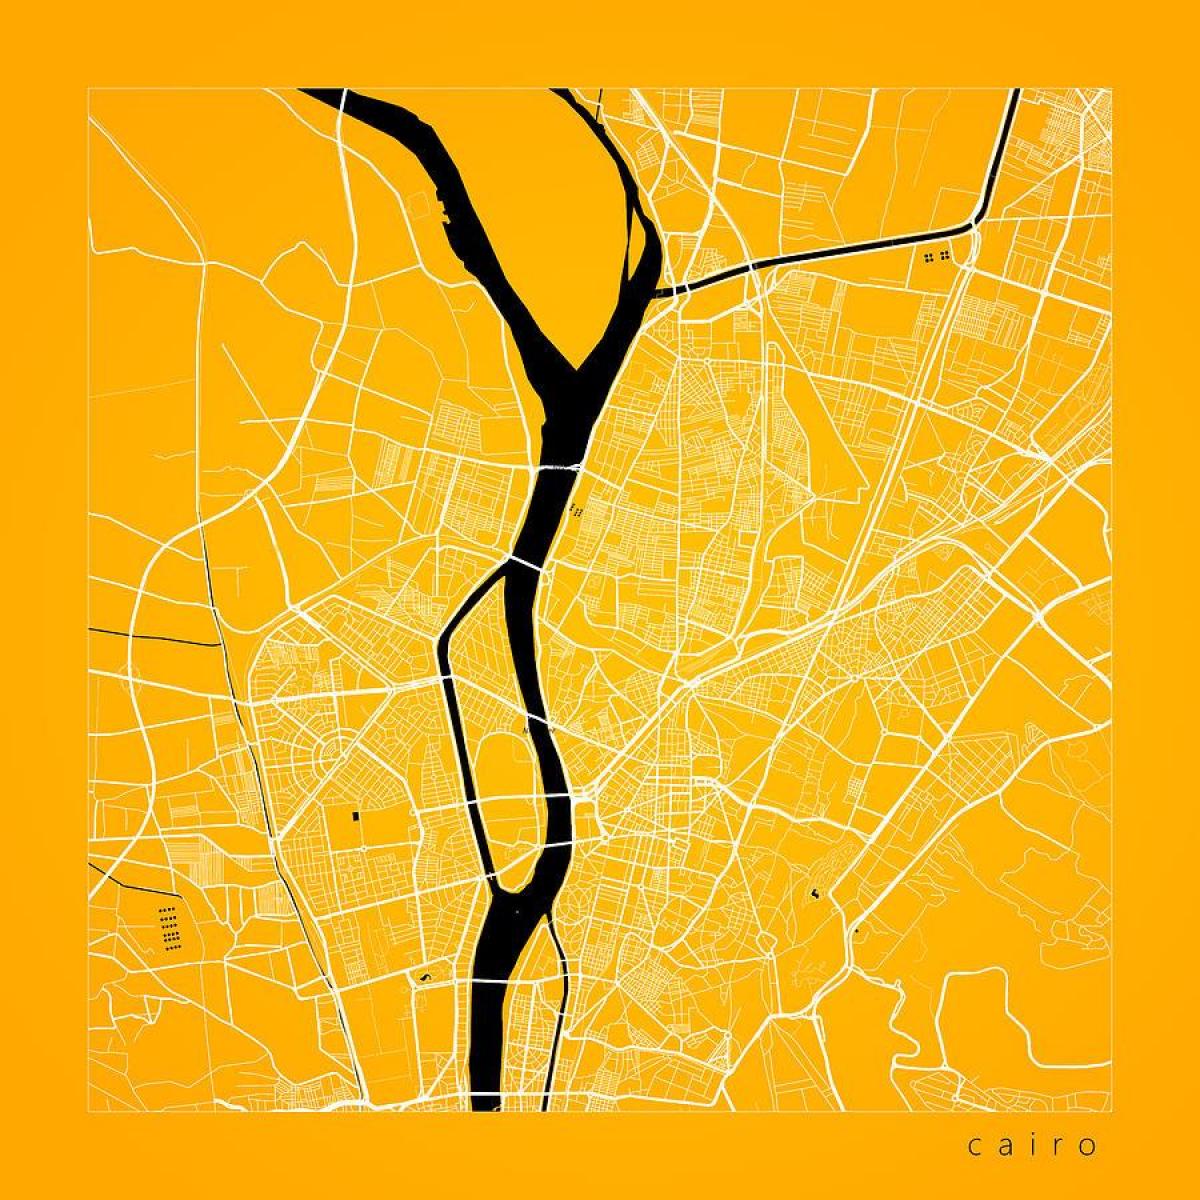 Karte von Kairo-Straße